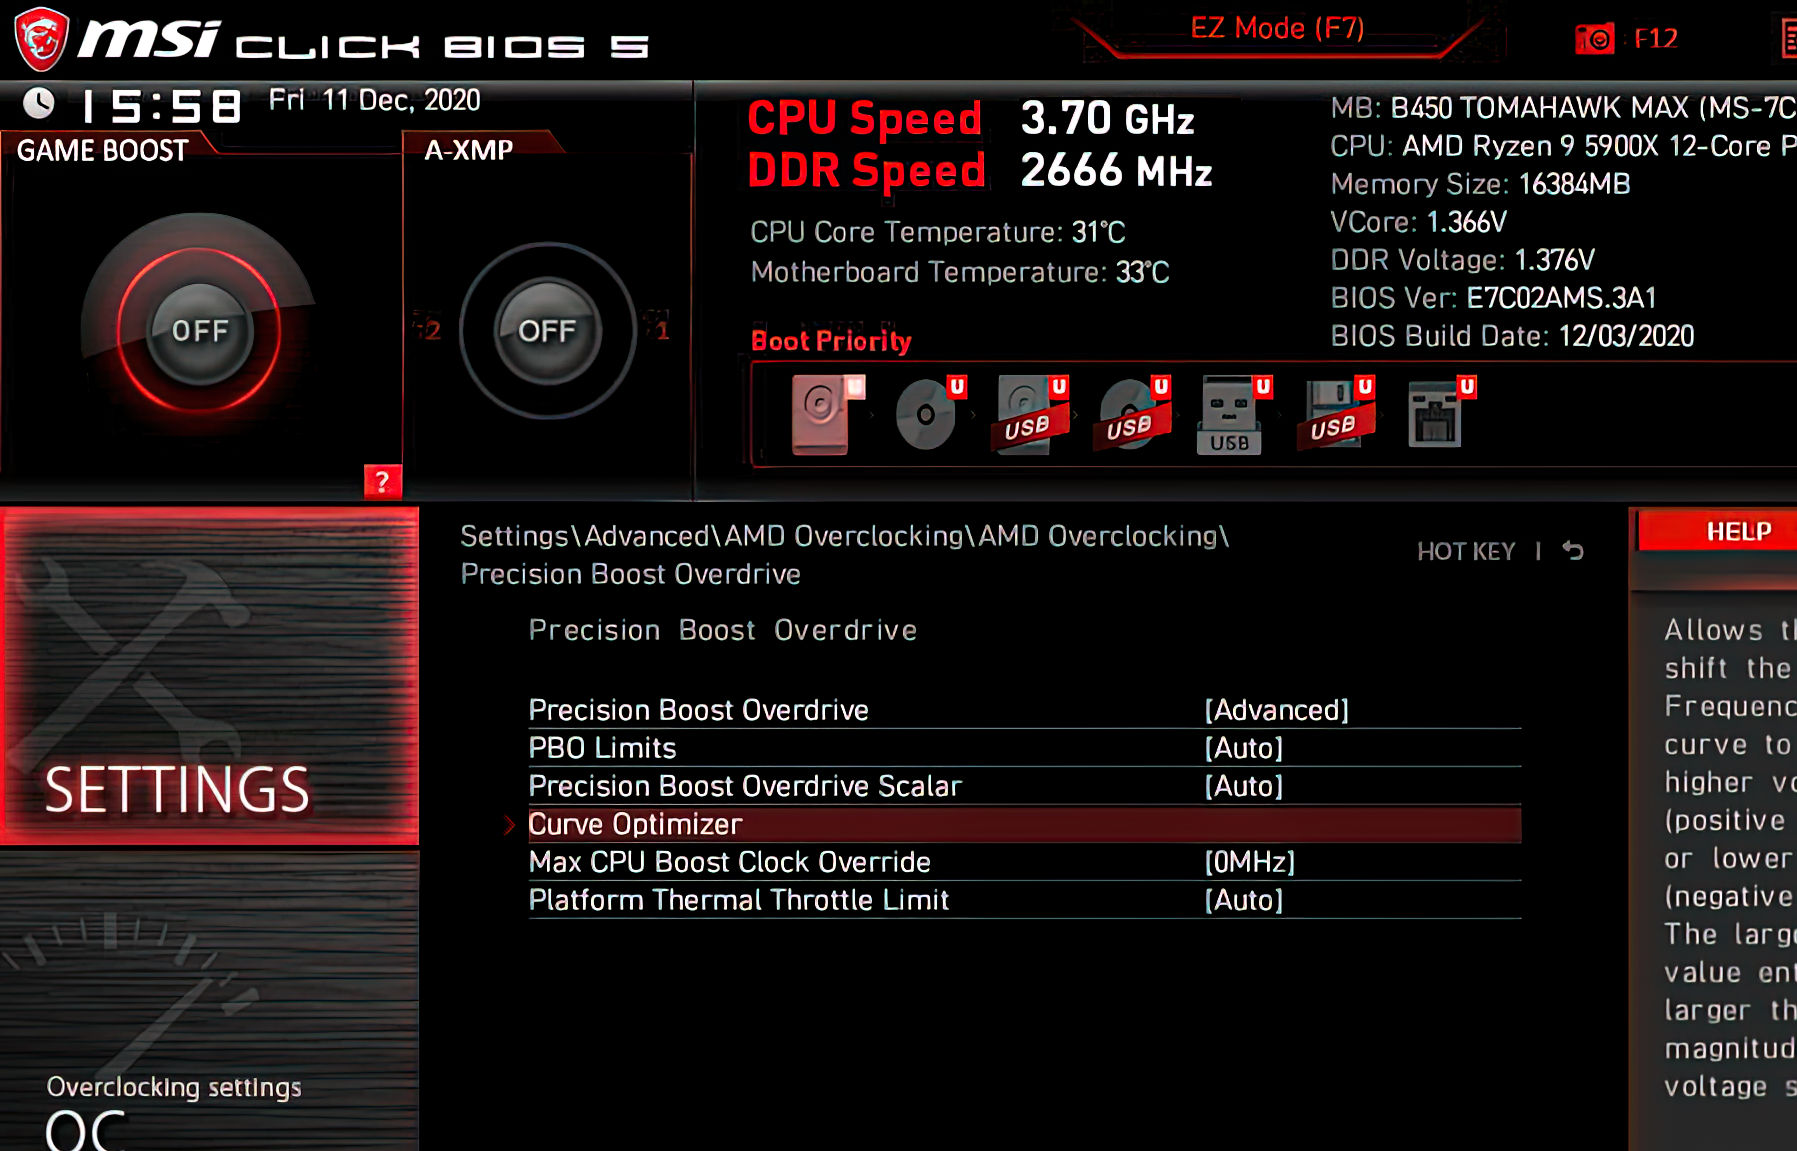 MSI demonstrates AMD Curve Optimizer on Ryzen 9 5900X and B450 Tomahawk